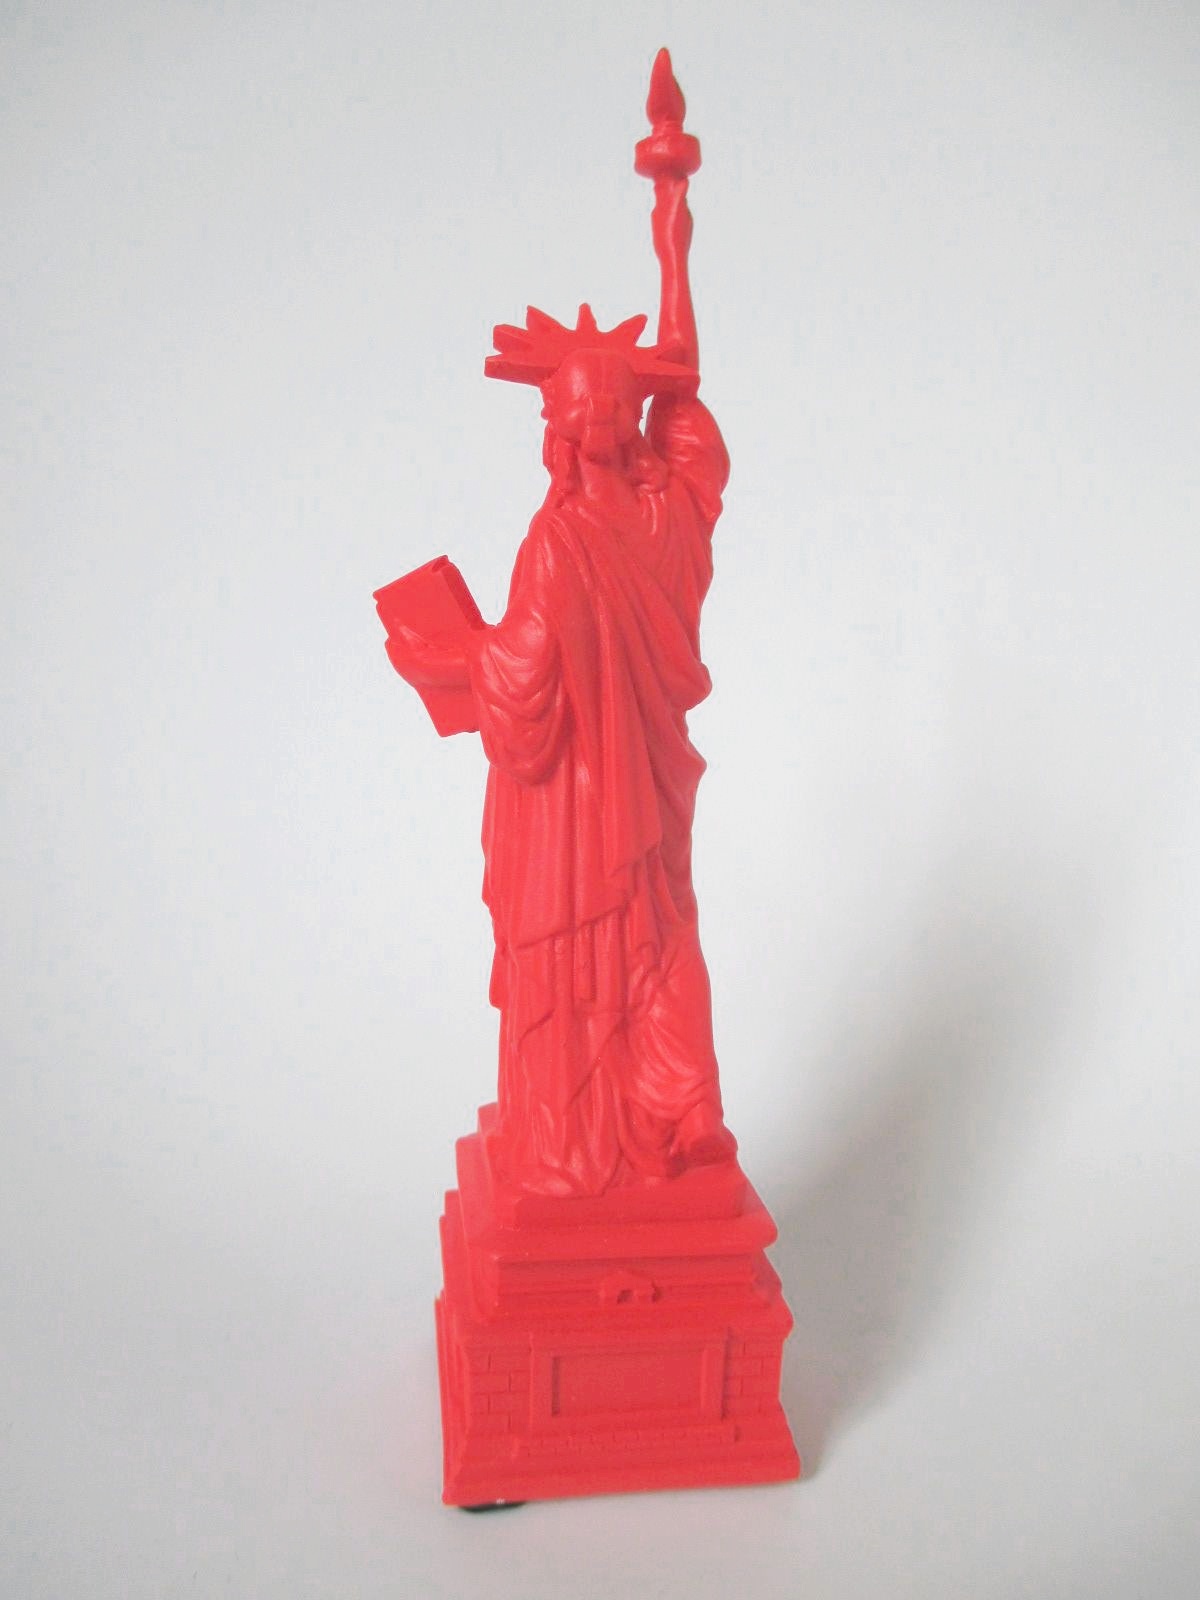 New York City Freiheitsstatue pink Statue of Liberty 16cm Souvenir USA